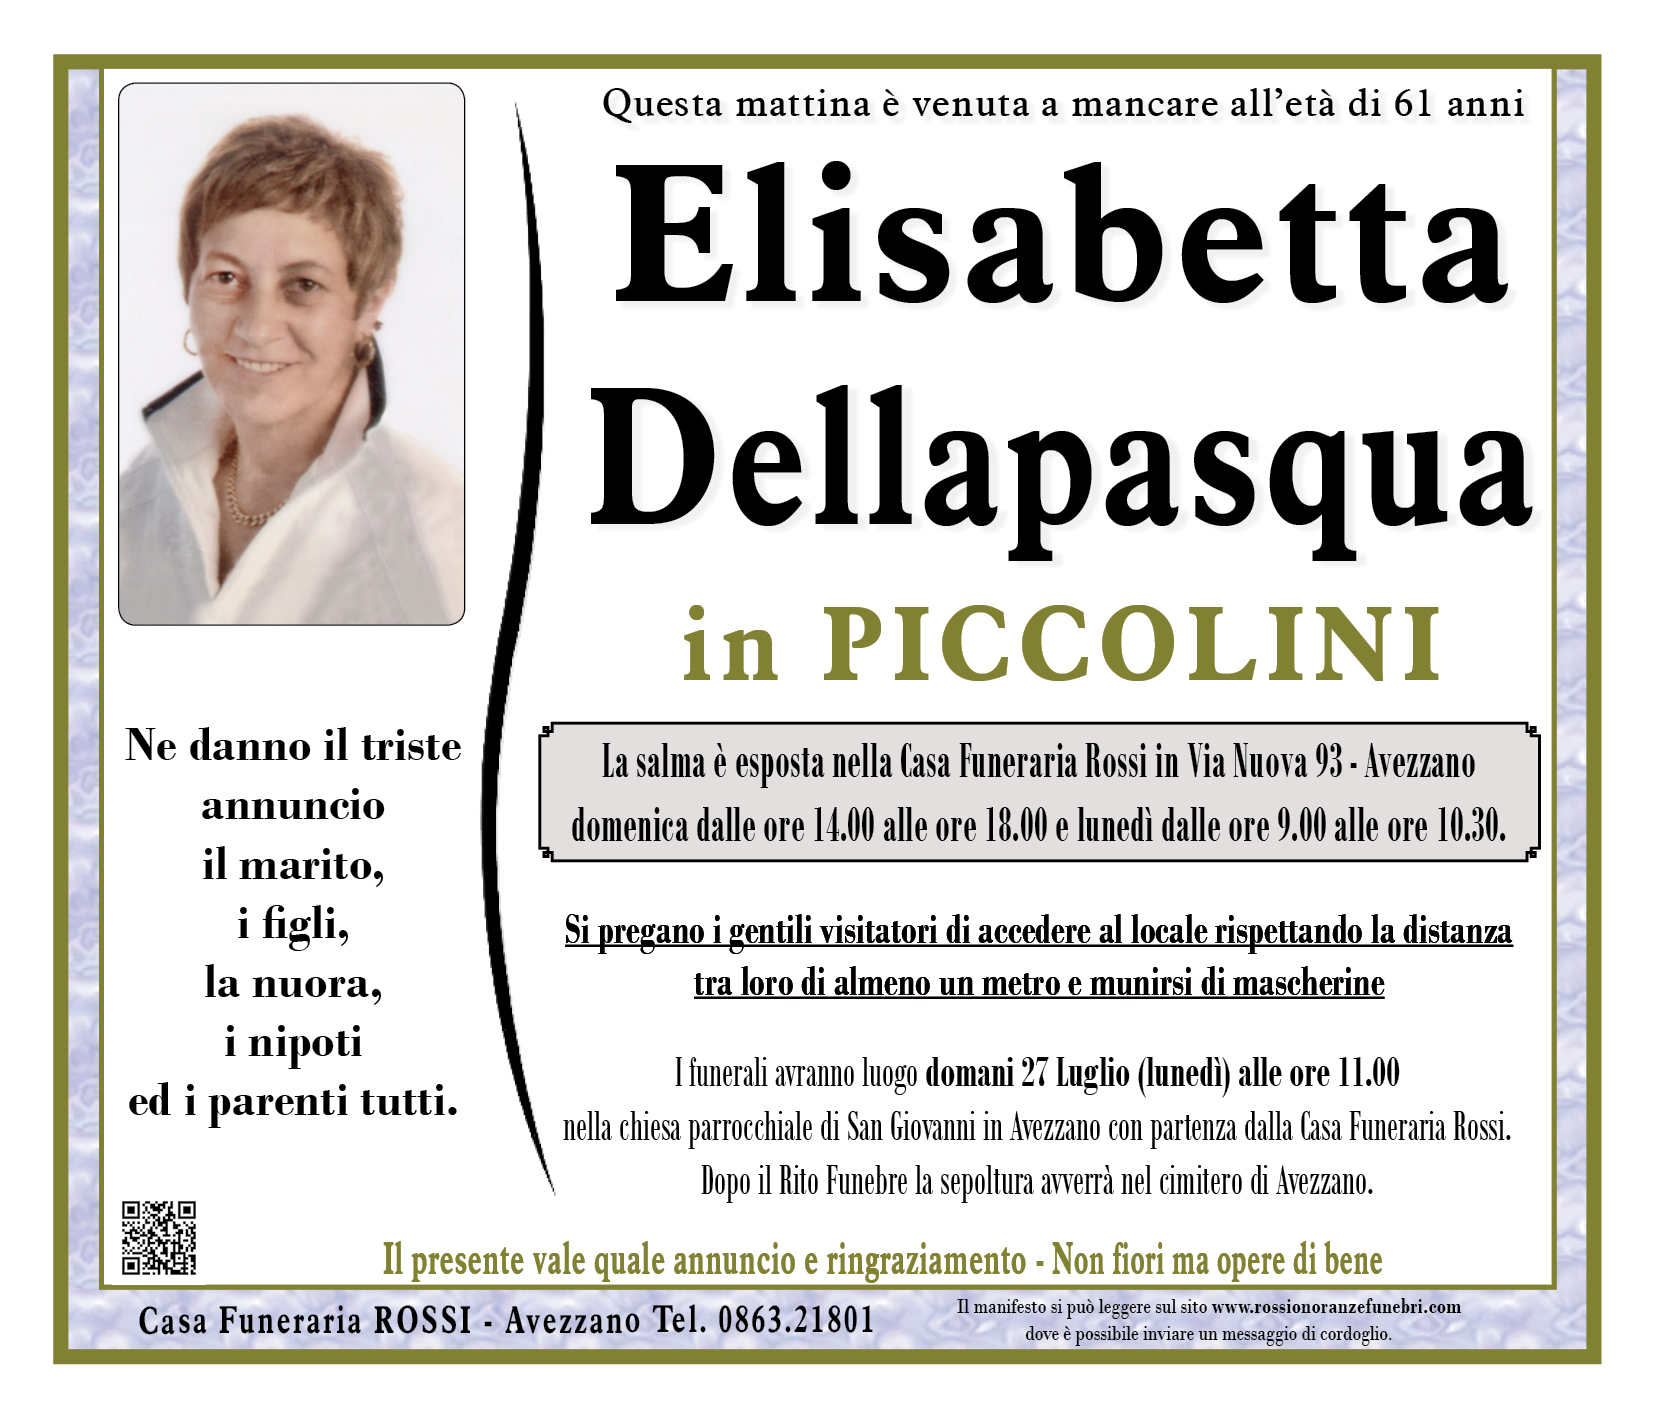 Elisabetta Dellapasqua